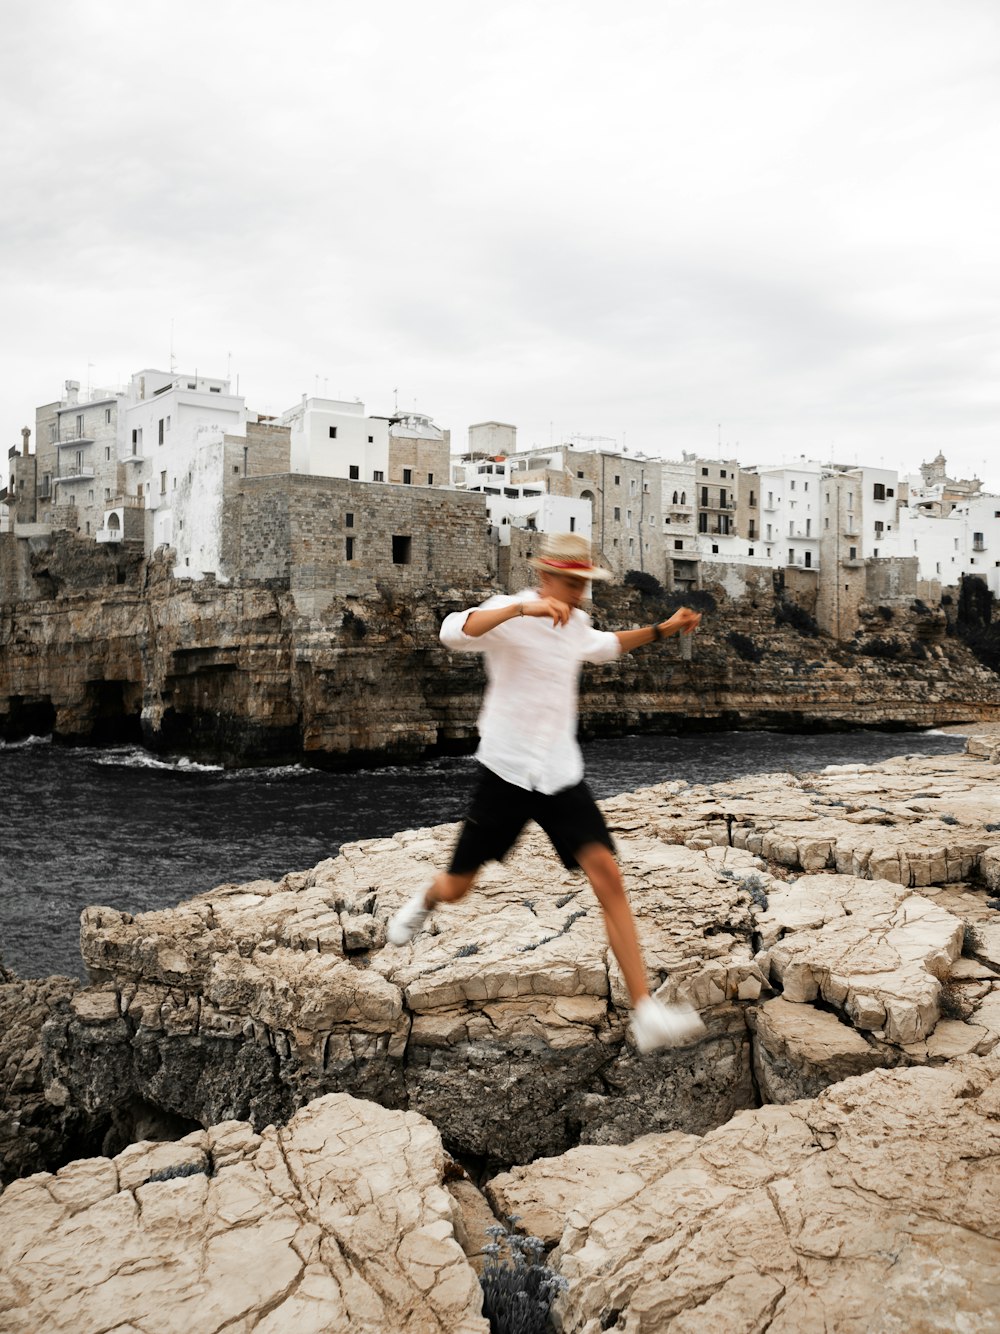 a man jumping on a rocky beach